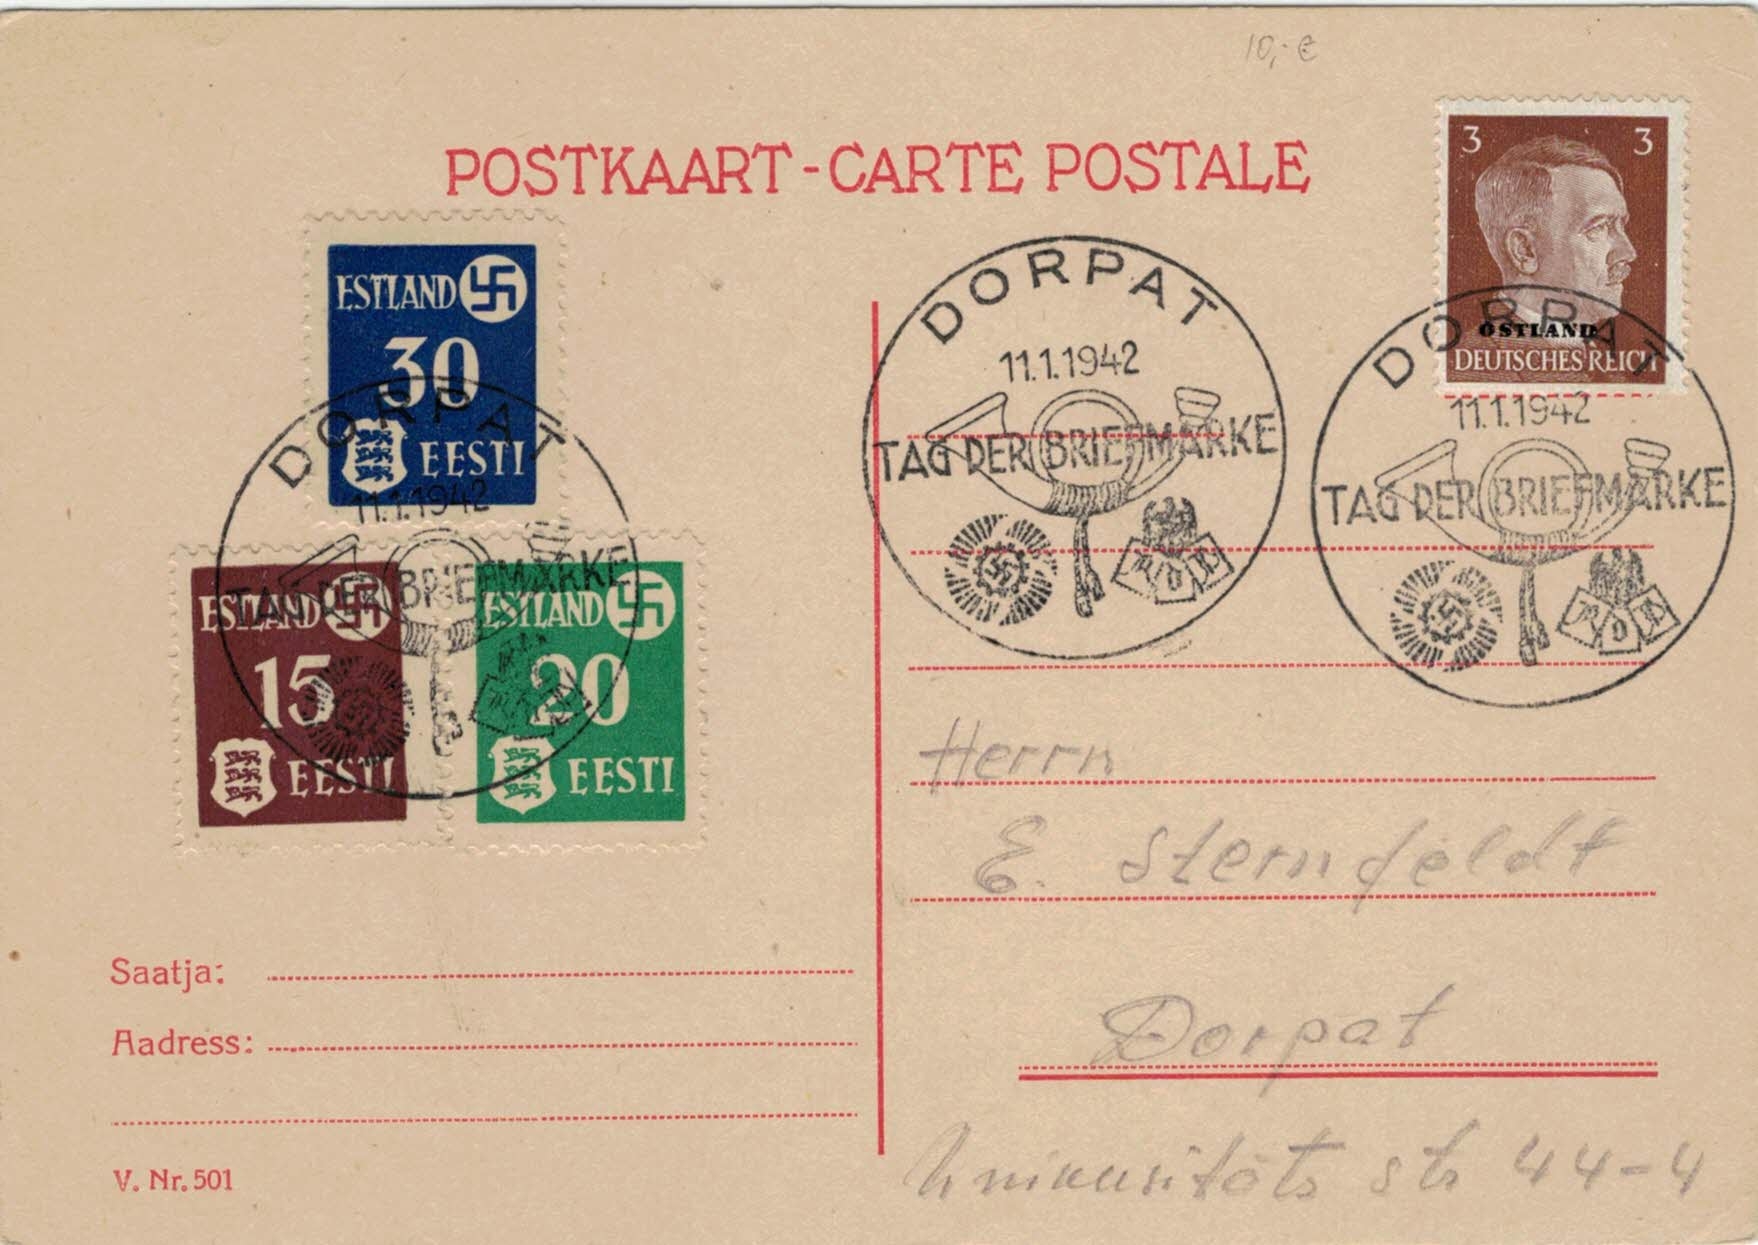 Dorpat 11.1.1942 Stamp Day 1942, unique special postmark Ostland (ditto Riga, Kauen).